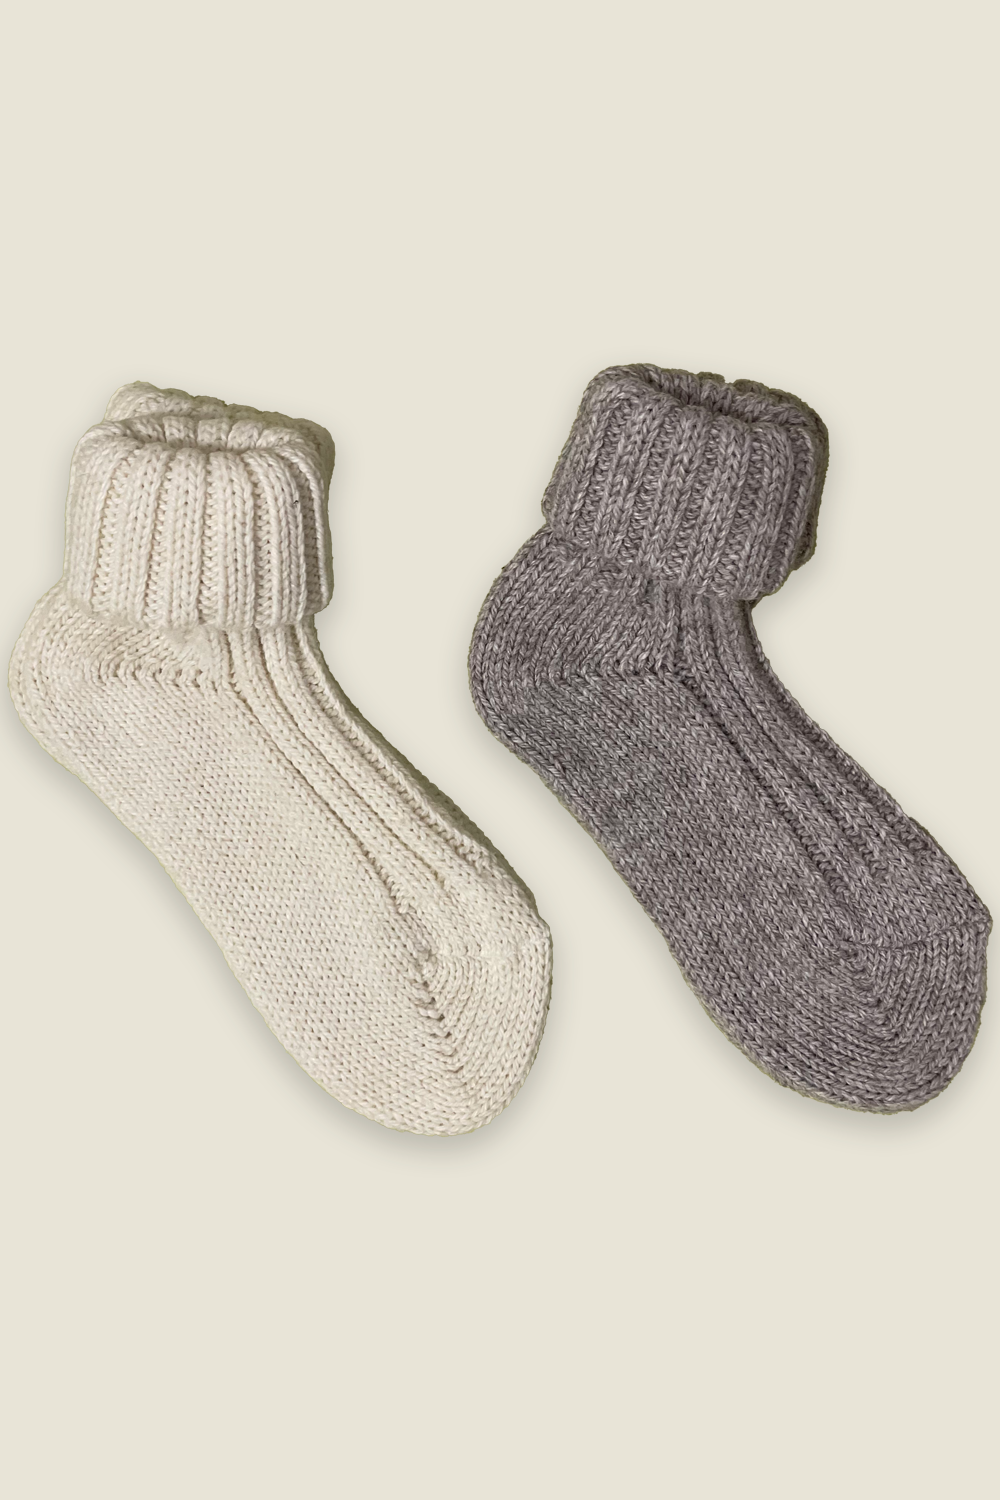 Alpaca Socks - natural and grey - 2 pairs